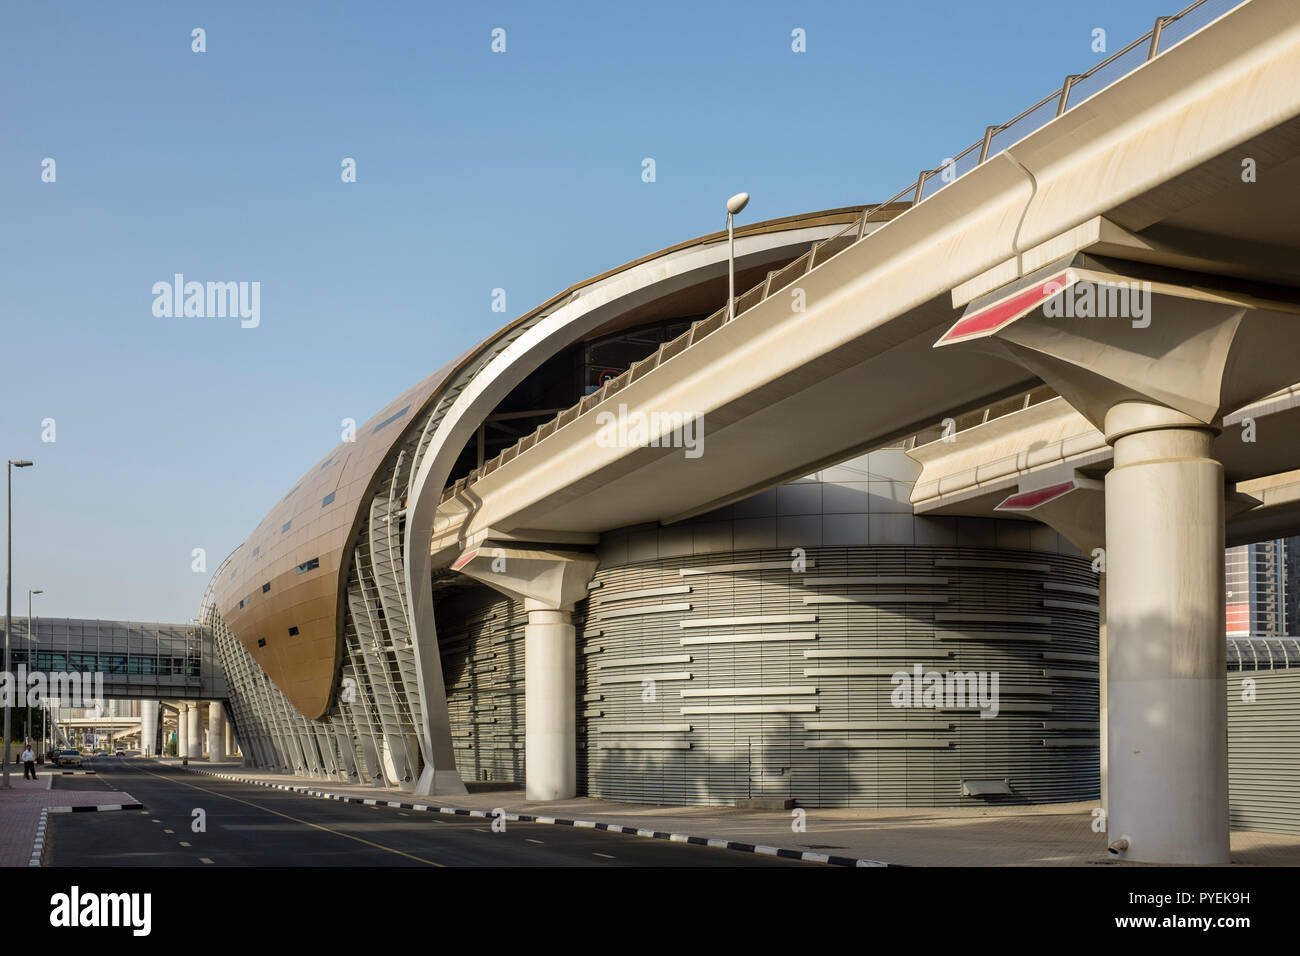 The Nakheel Metro station services both the Dubai Internet City and Dubai Media City districts of Dubai, as well as the Emirates Golf Club Stock Photo